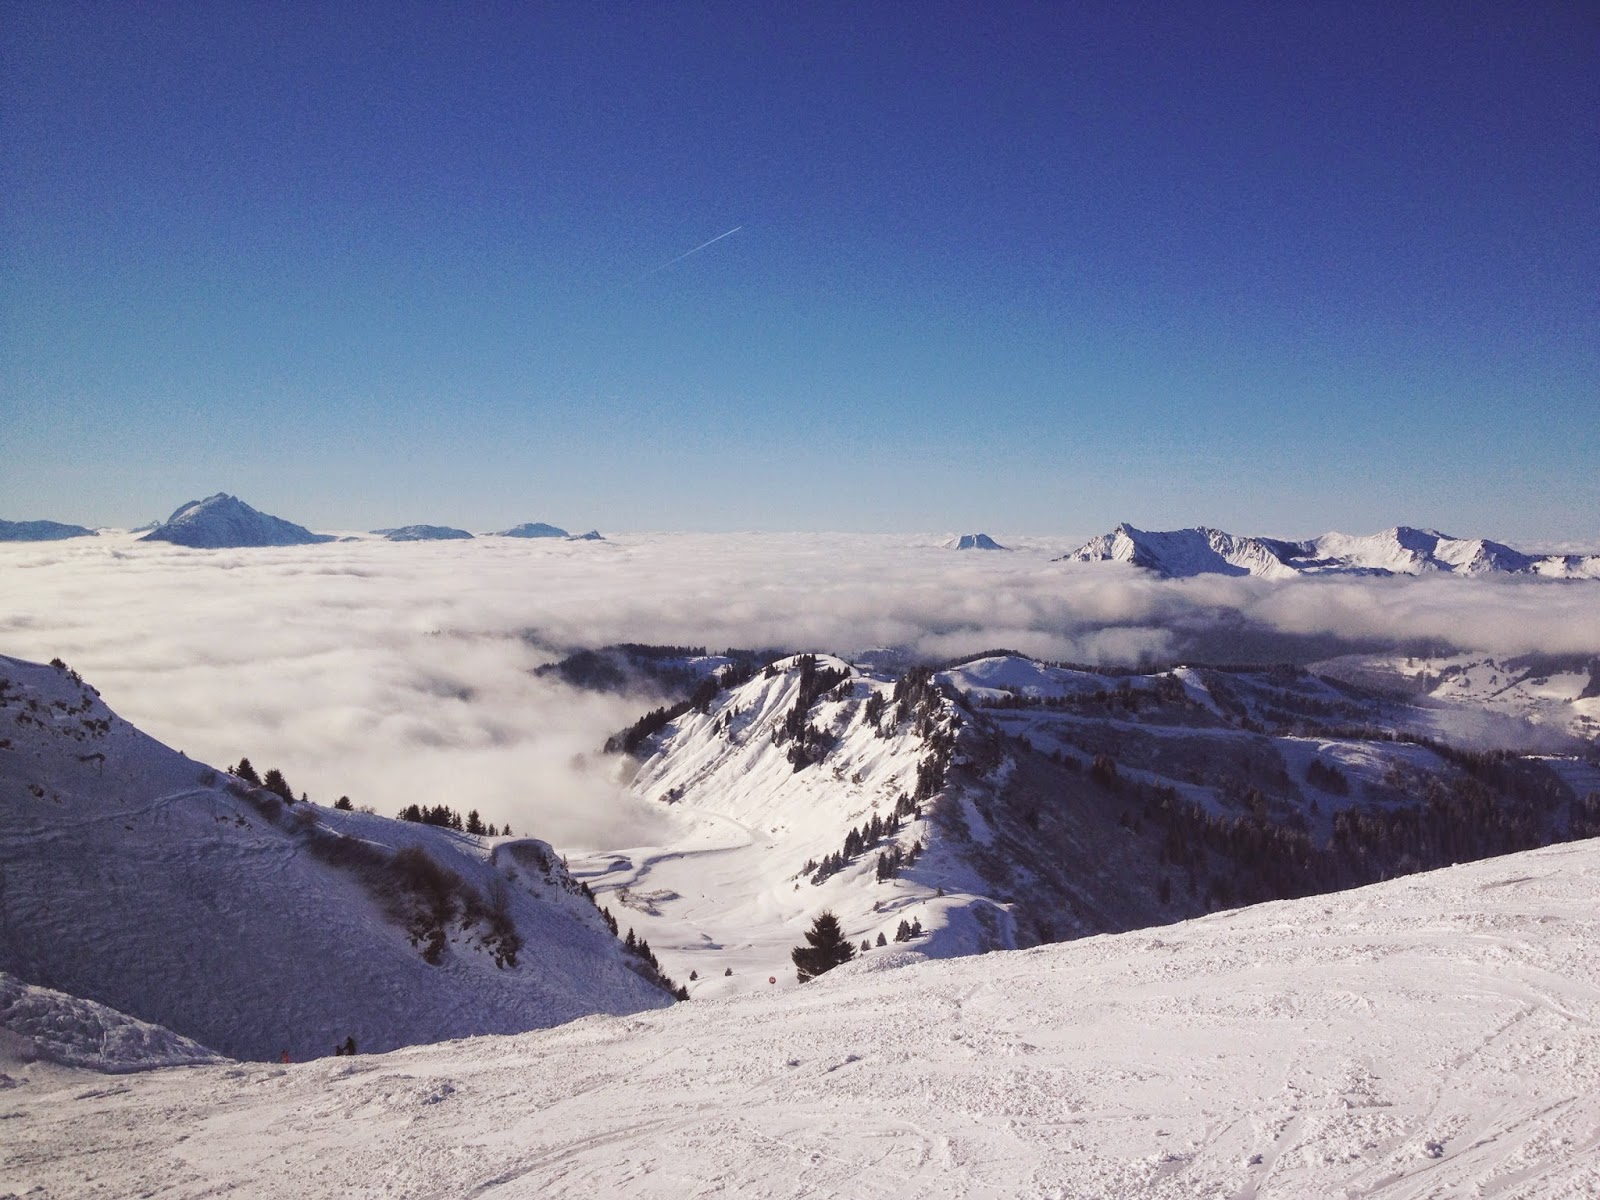 Les Gets, Morzine, clouds, view, beautiful, vsco, snow